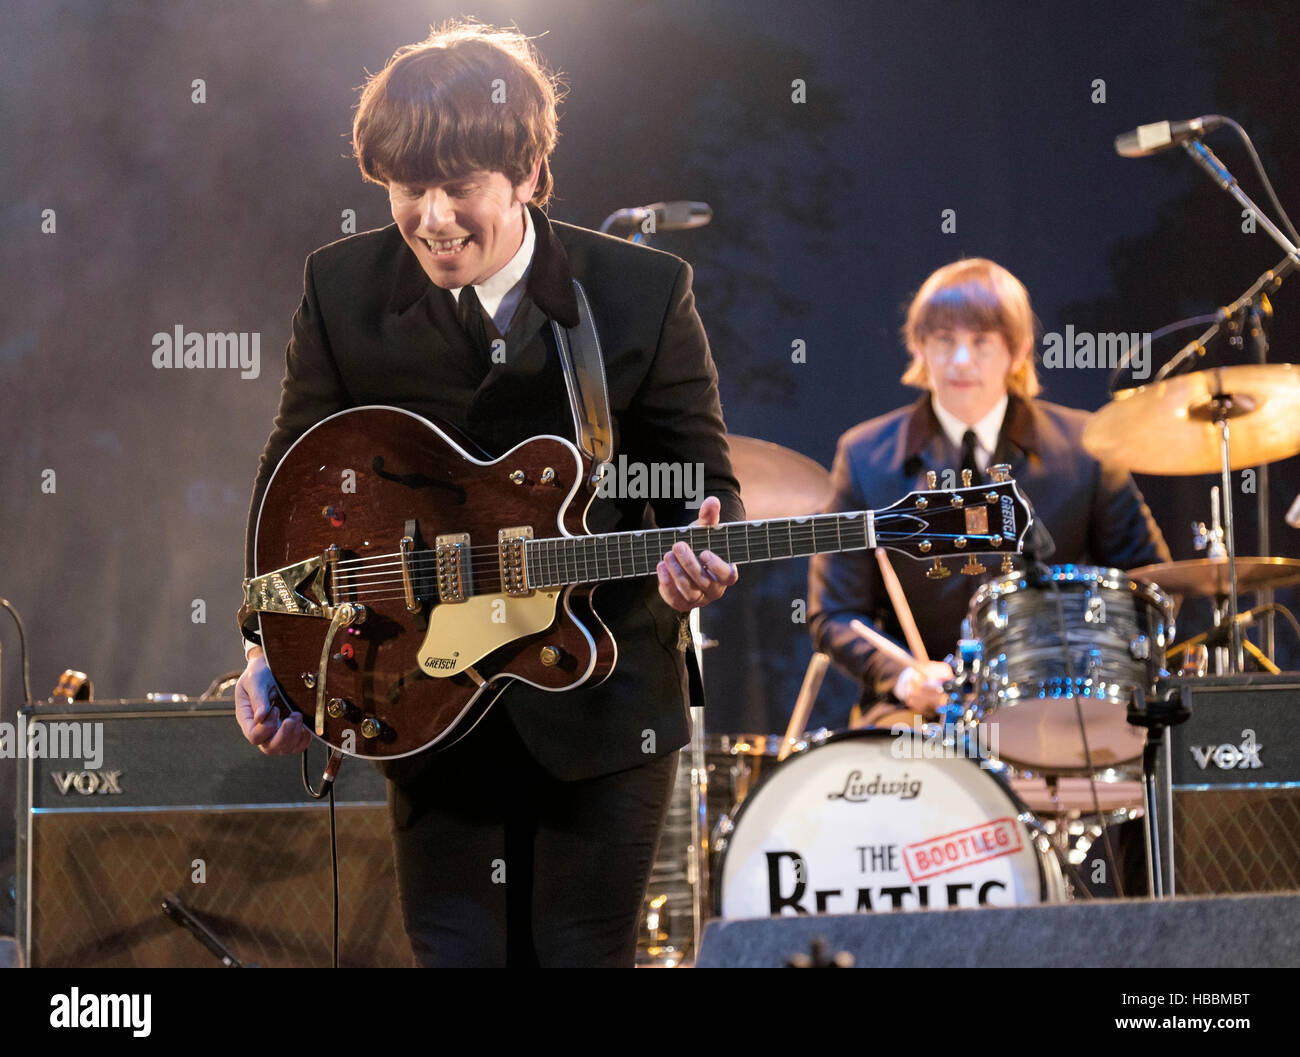 Stephen Hill del bootleg Beatles actuando en la Convención Cropredy Fairport, Banbury, Inglaterra, Reino Unido. Agosto 12, 2016 Foto de stock